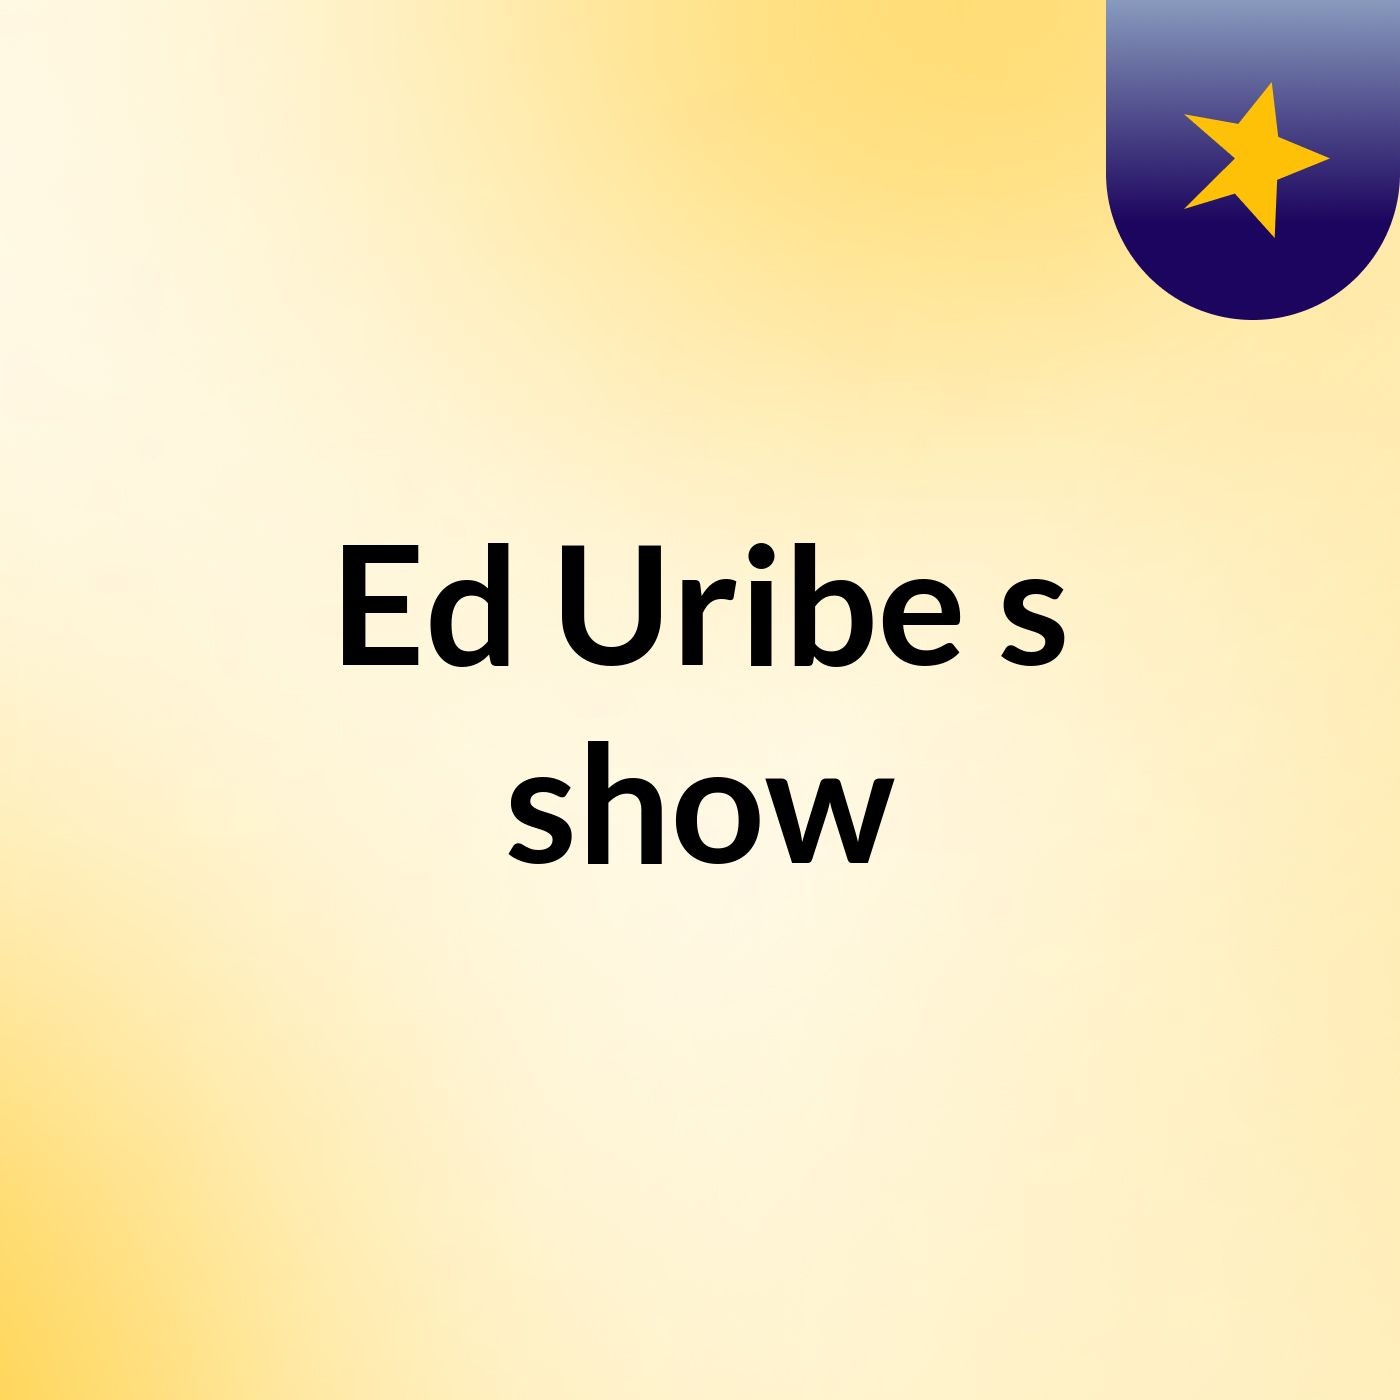 Ed Uribe's show